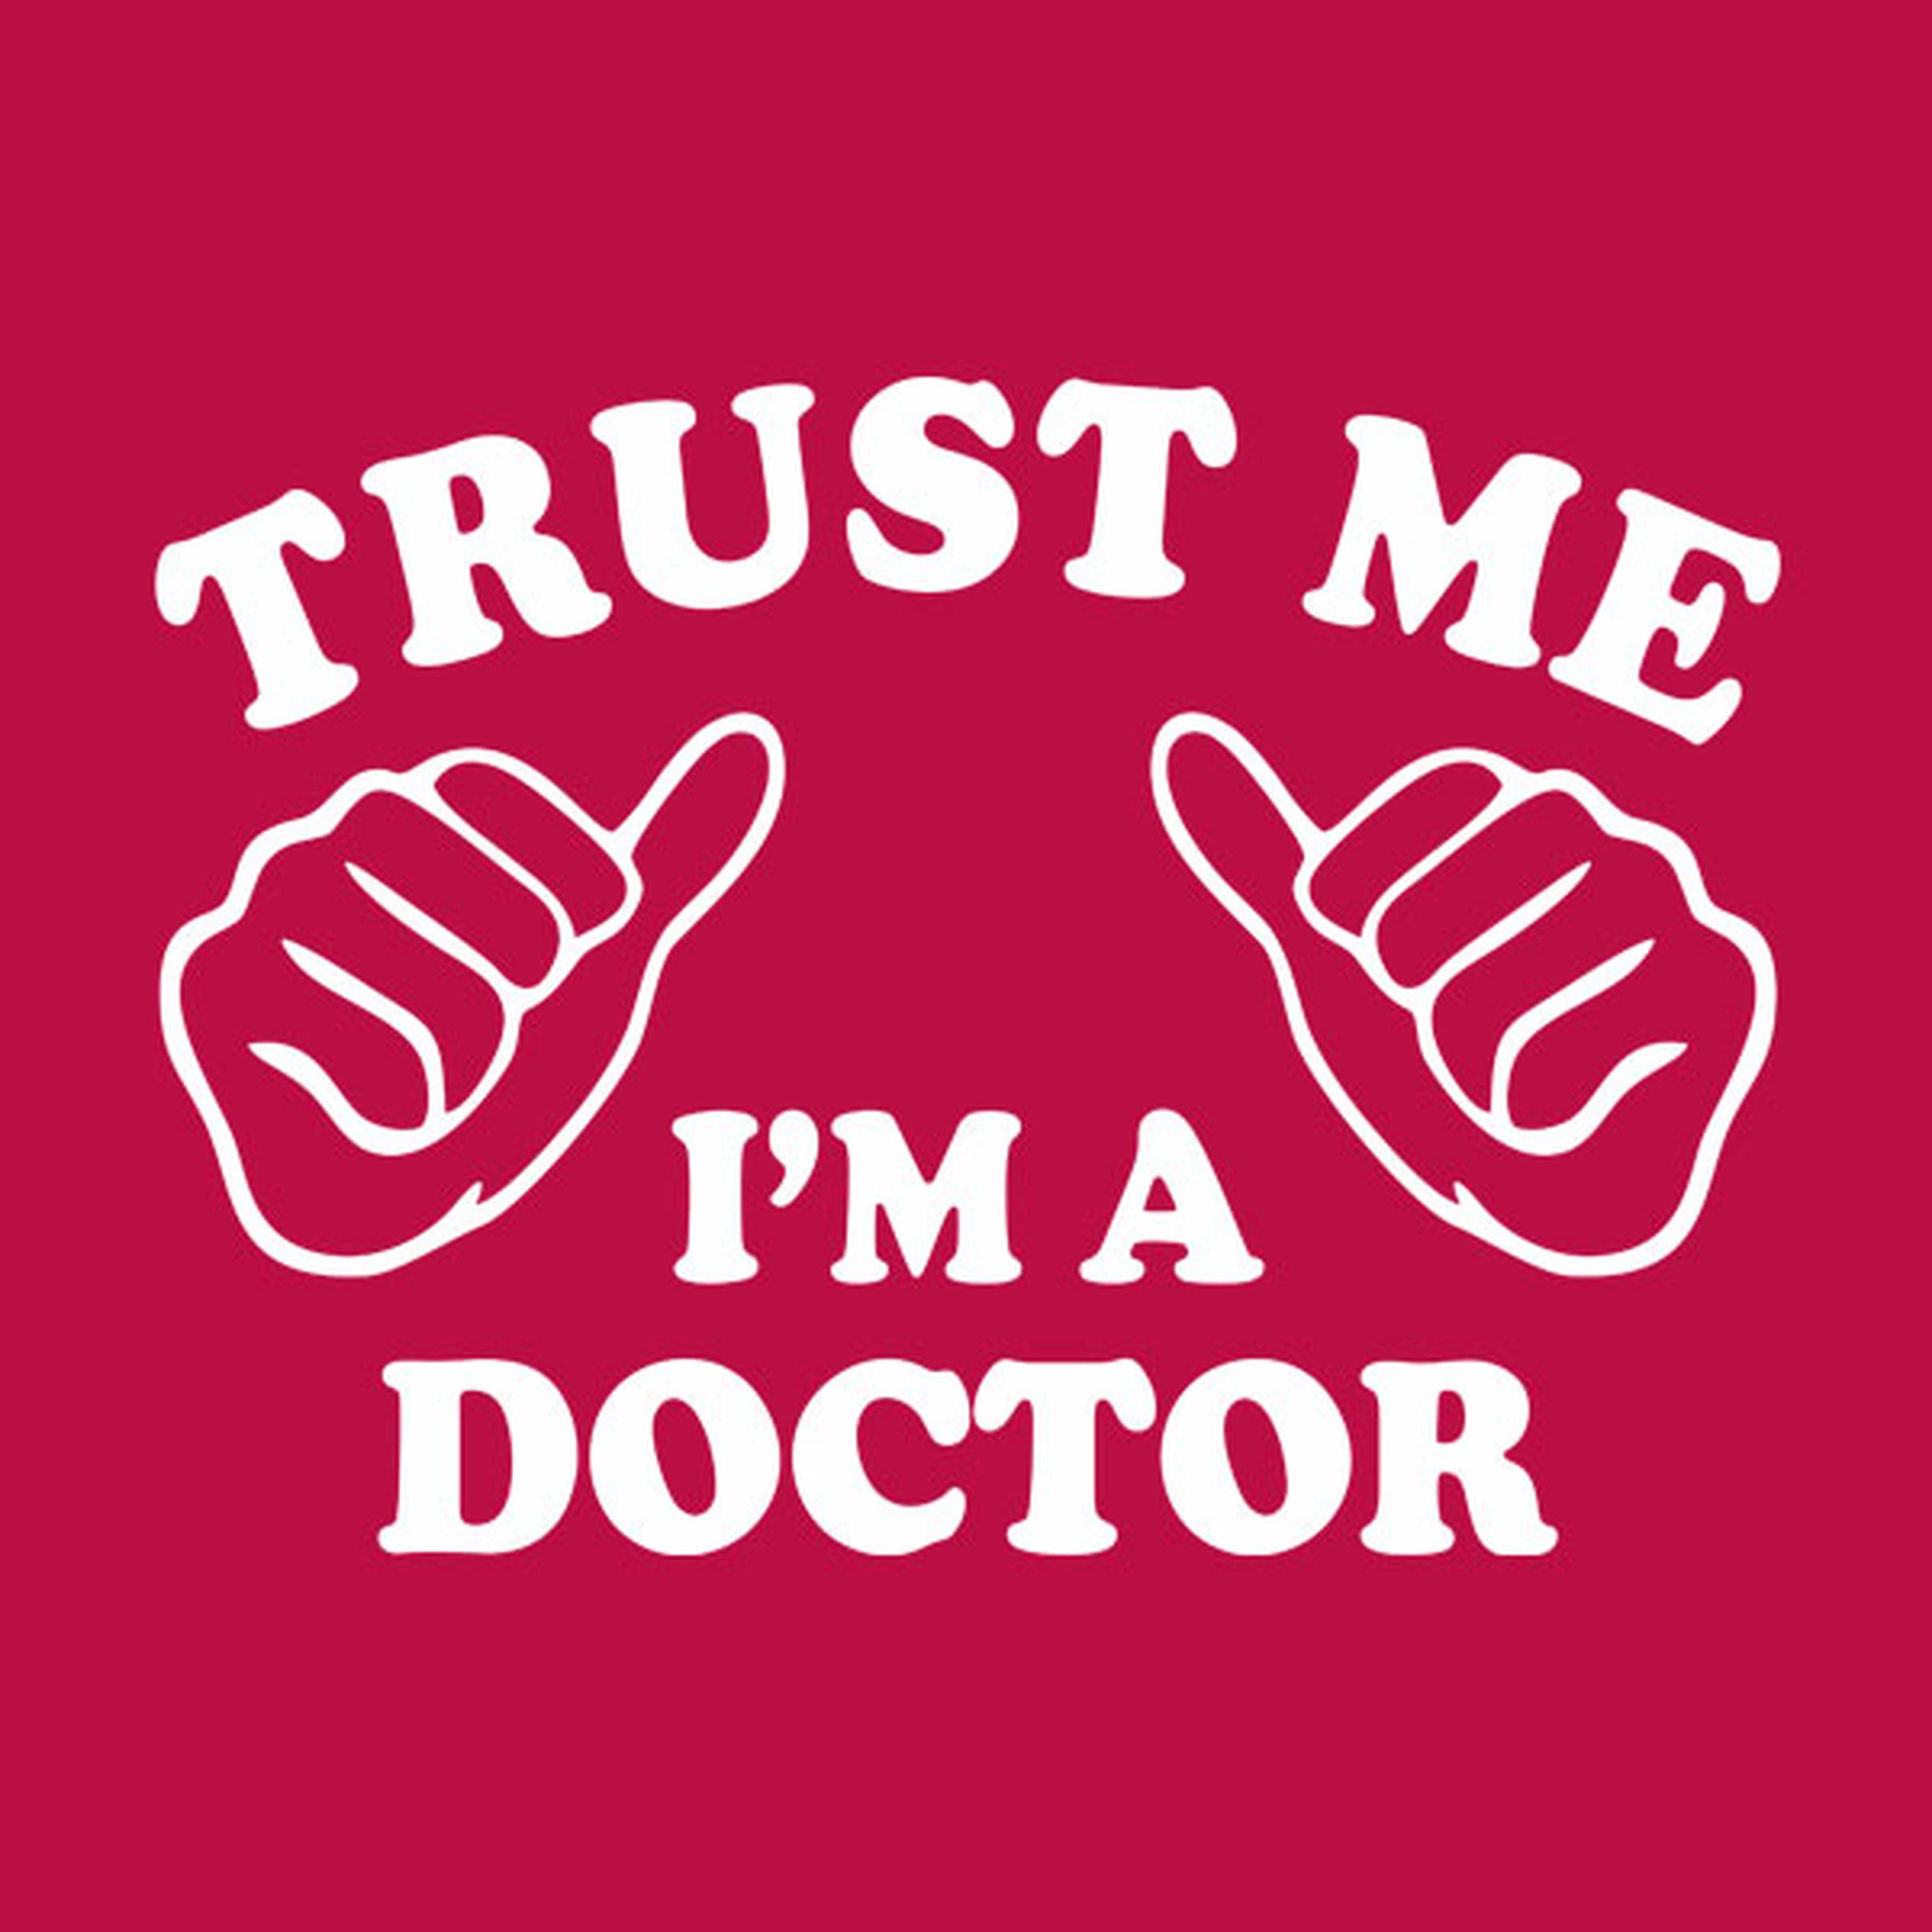 Trust me - I am a doctor - T-shirt